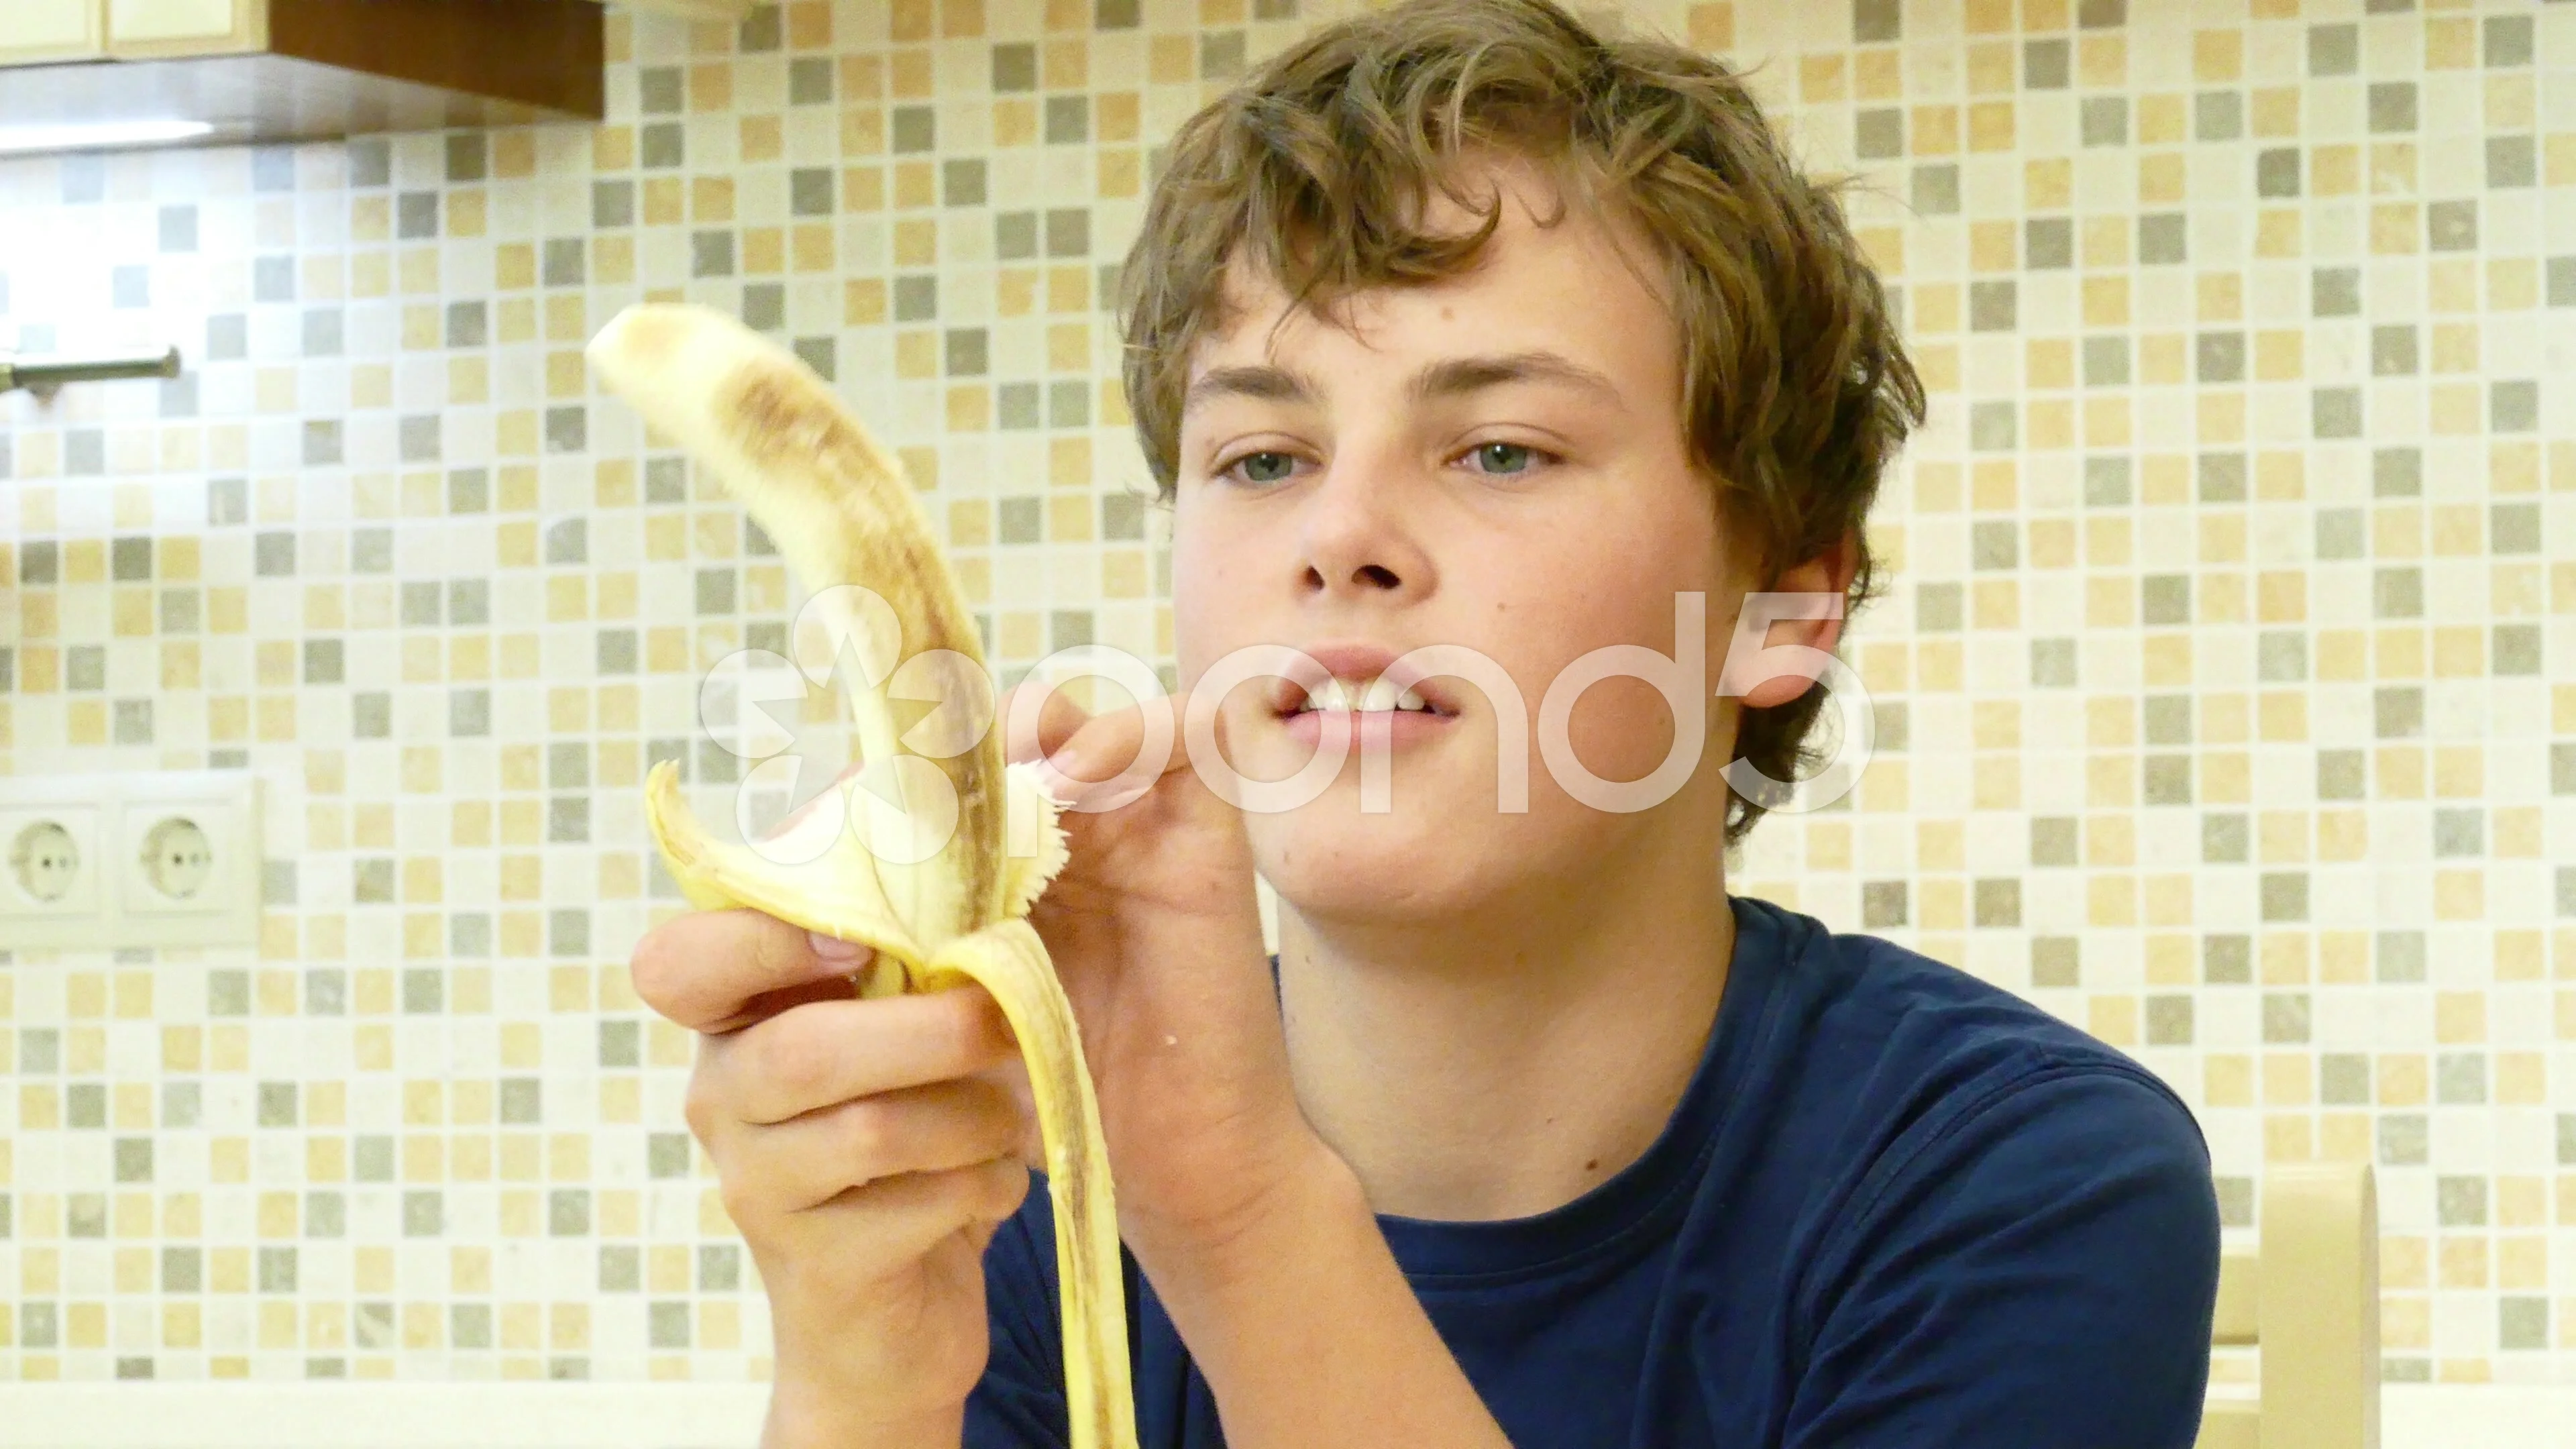 guy eating banana